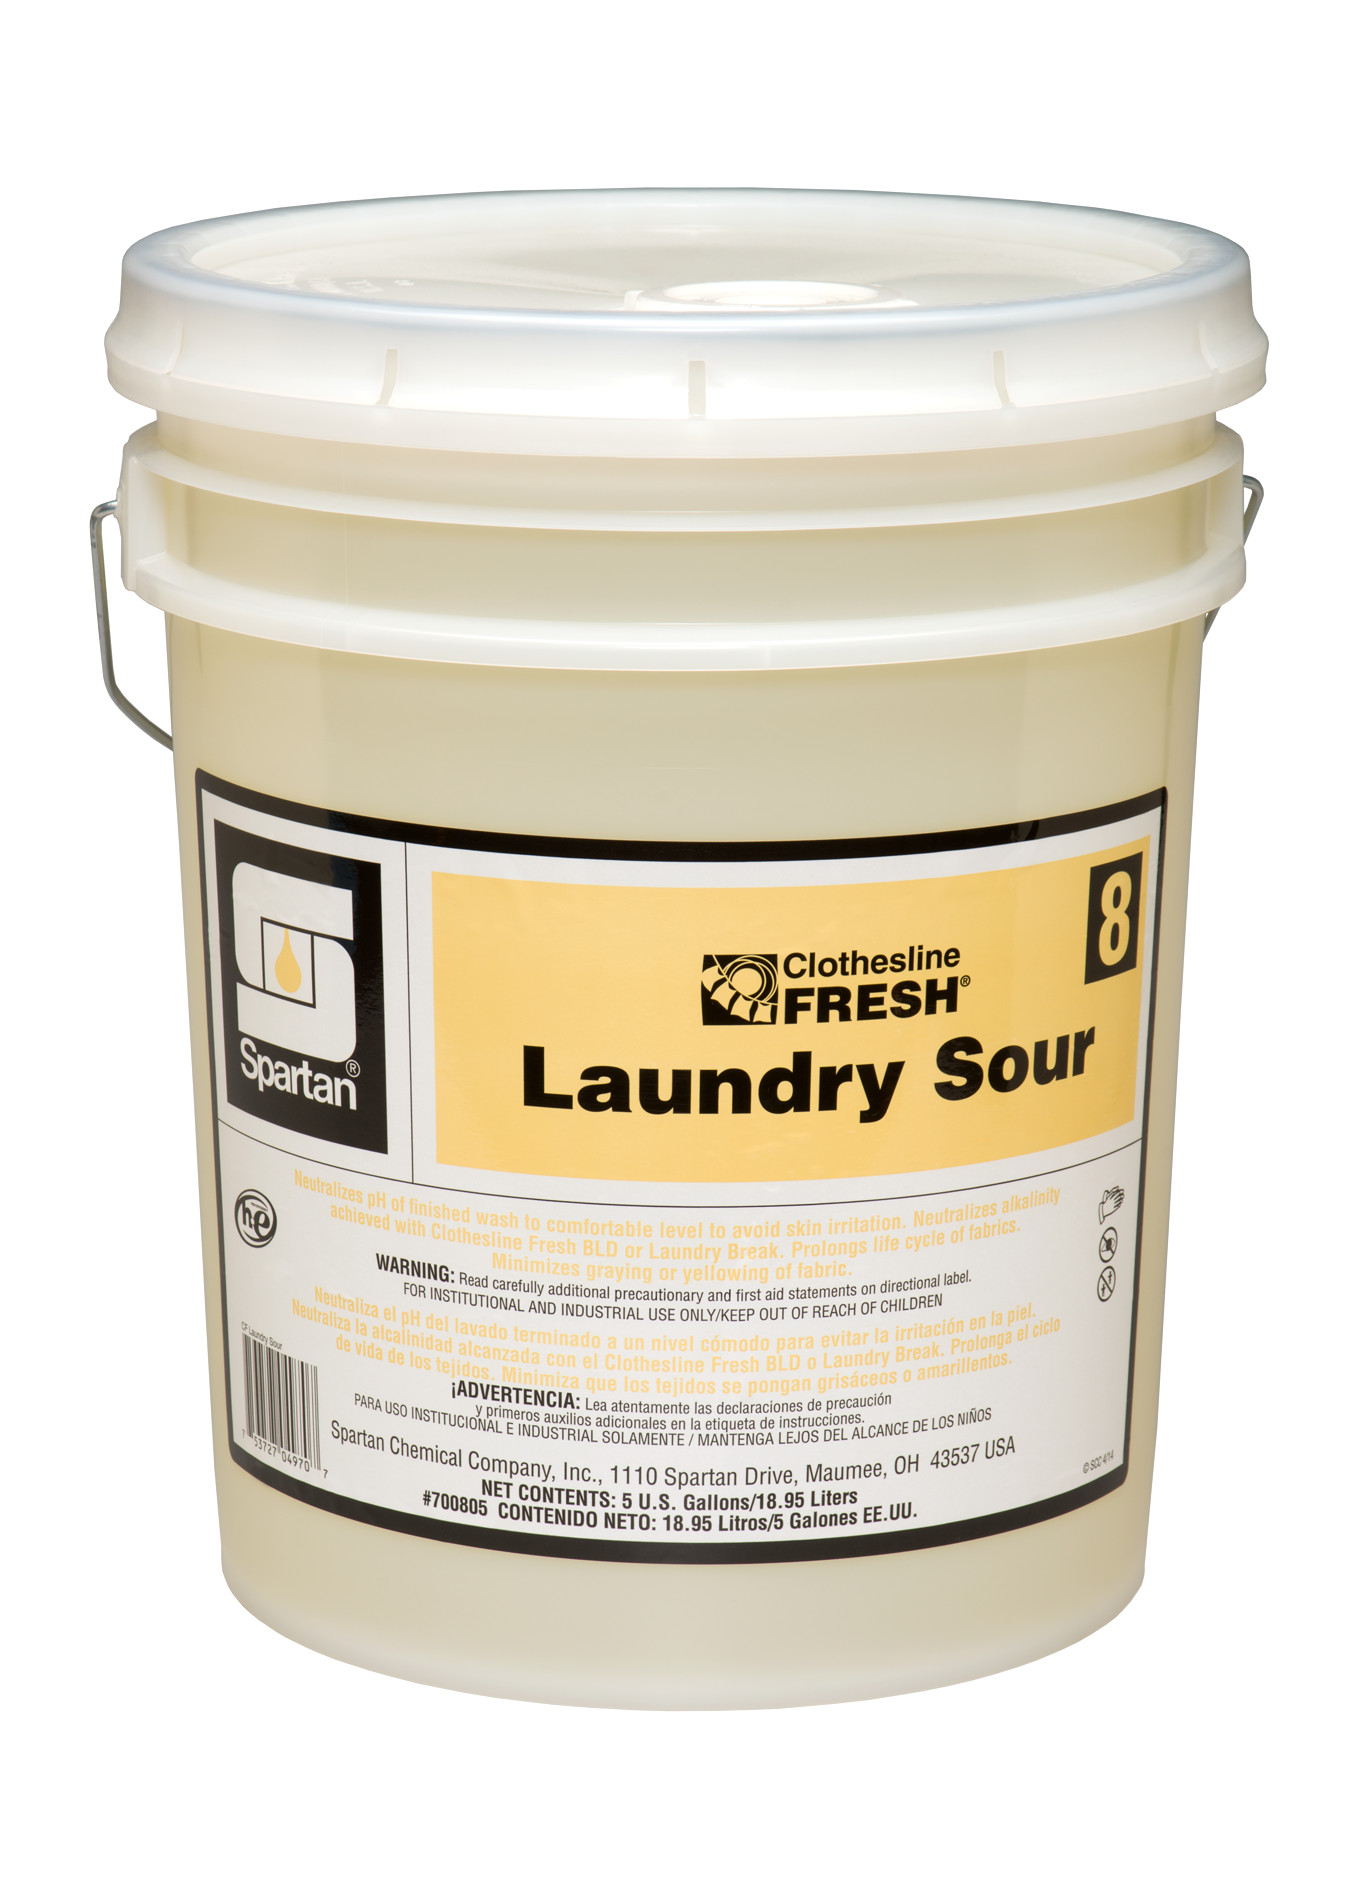 Spartan Chemical Company Clothesline Fresh Laundry Sour 8, 5 GAL PAIL